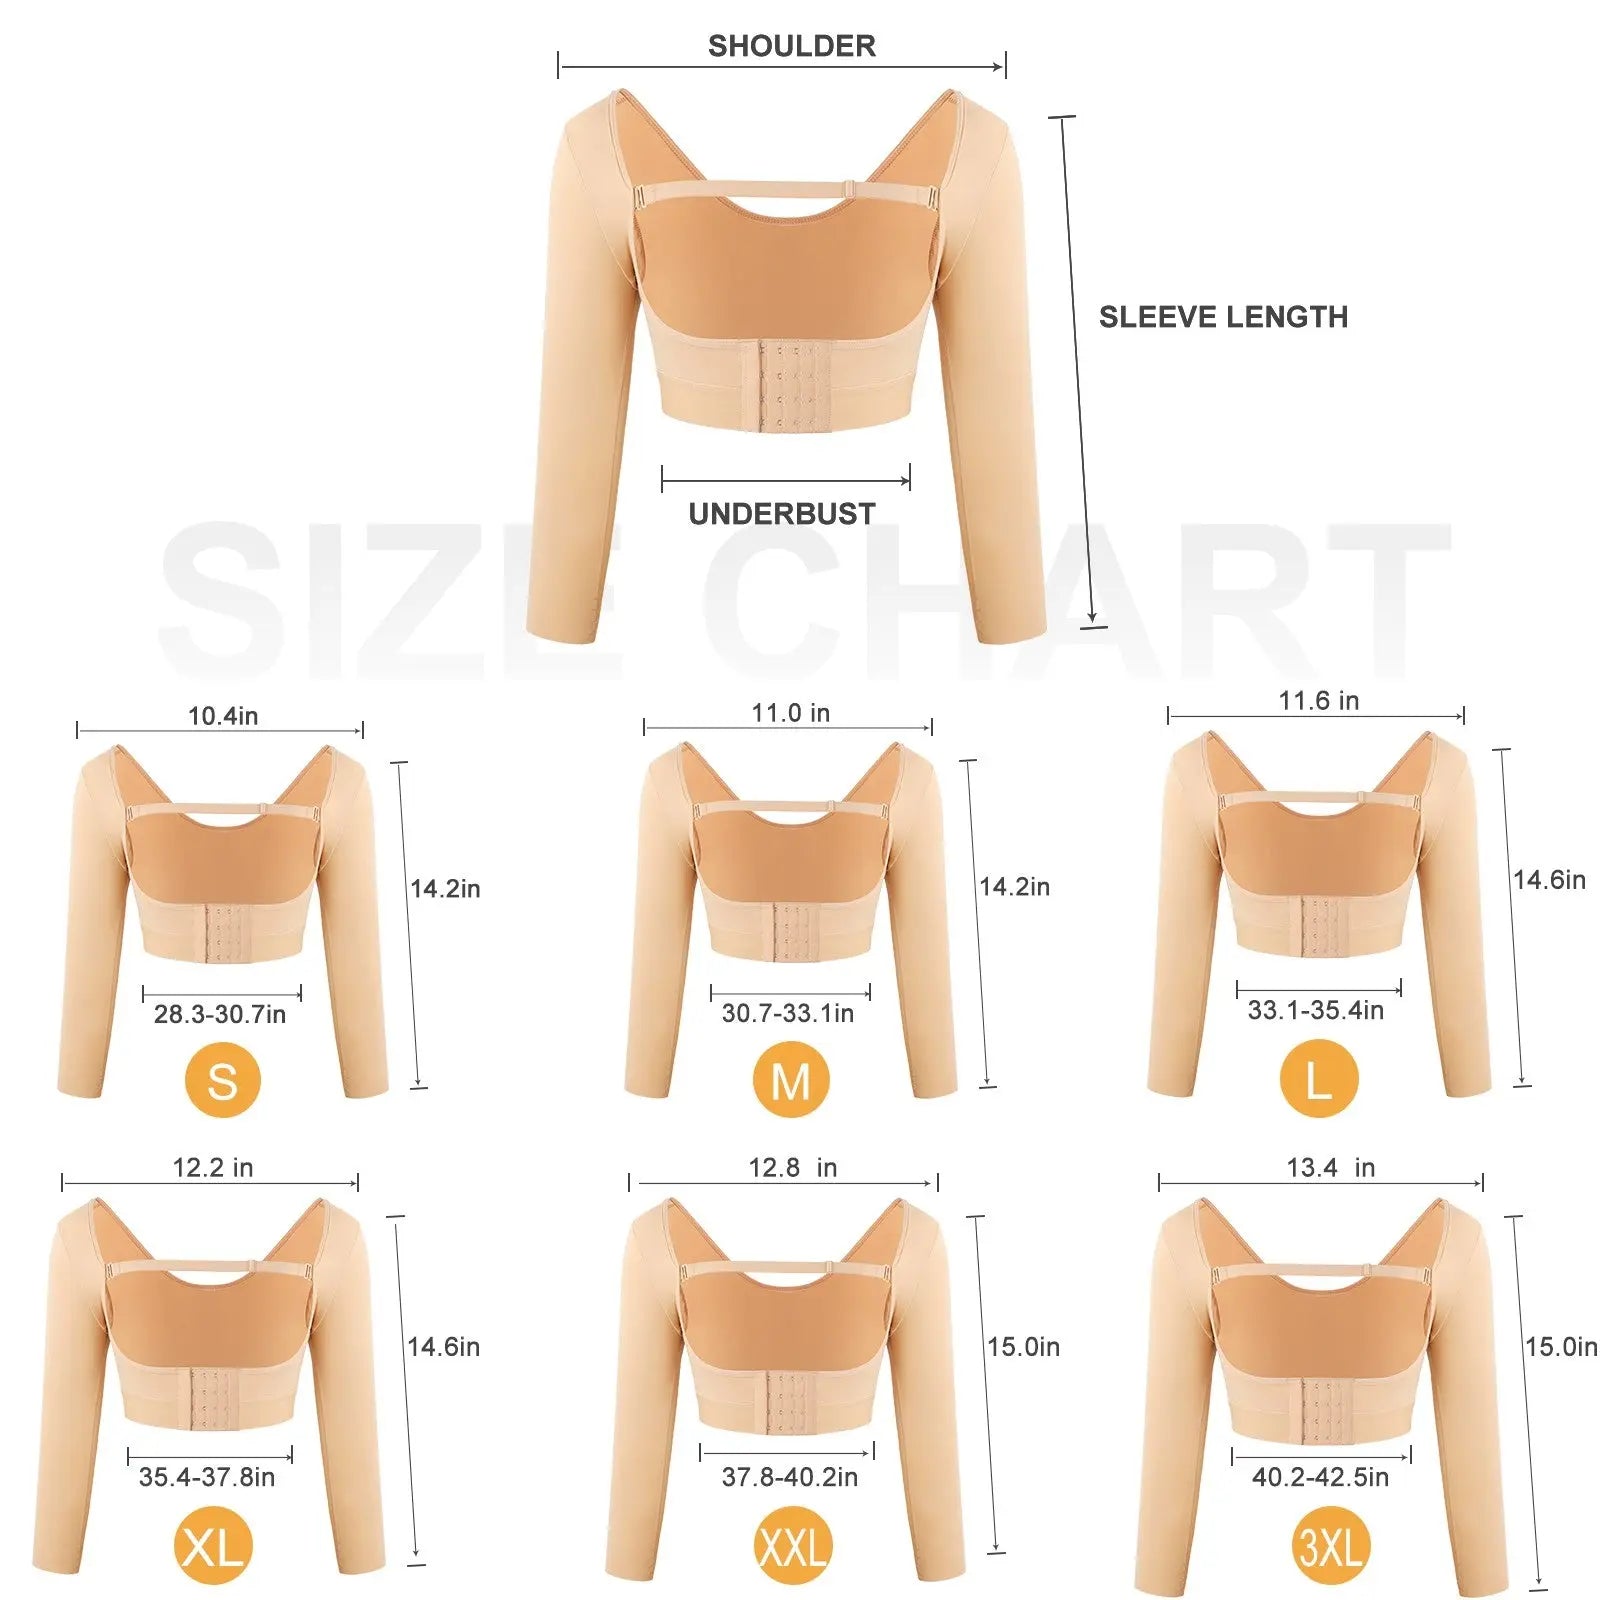 Long Sleeve Arm Garment - THE BODY FIX